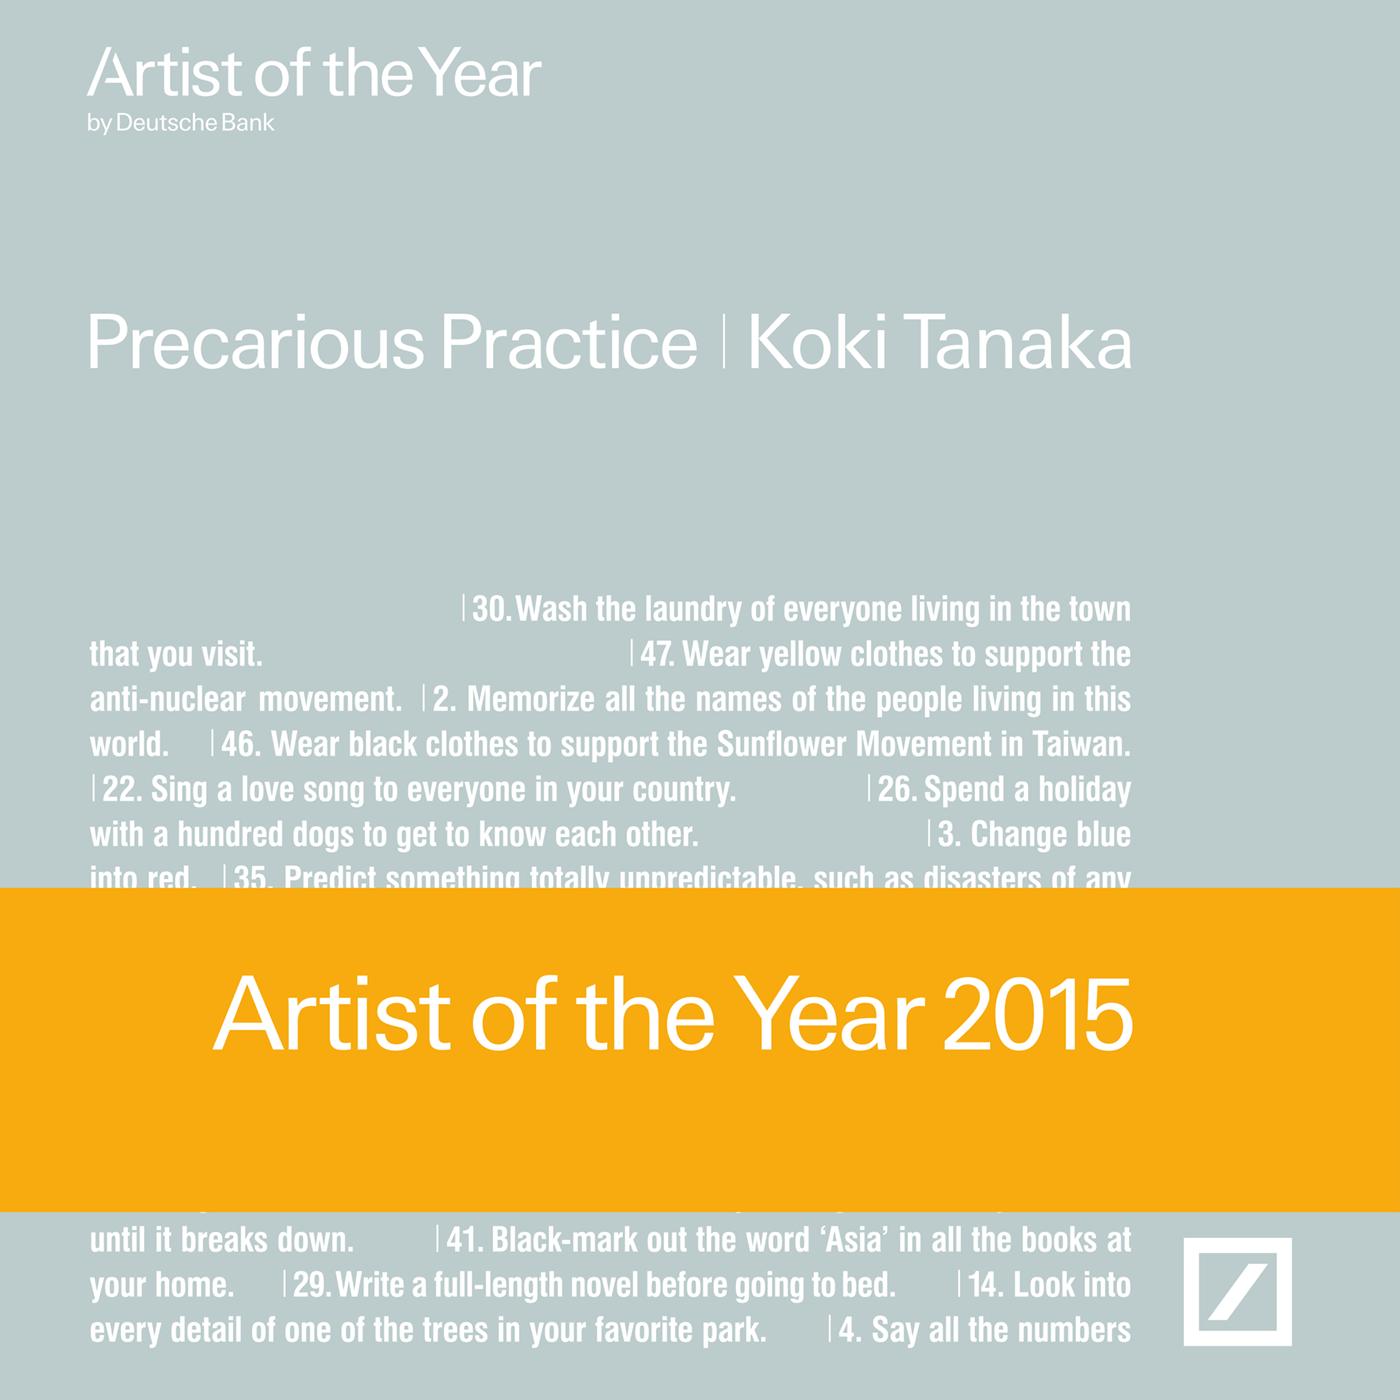 Koki Tanaka “Precarious Practice” Artist of The Year 2015